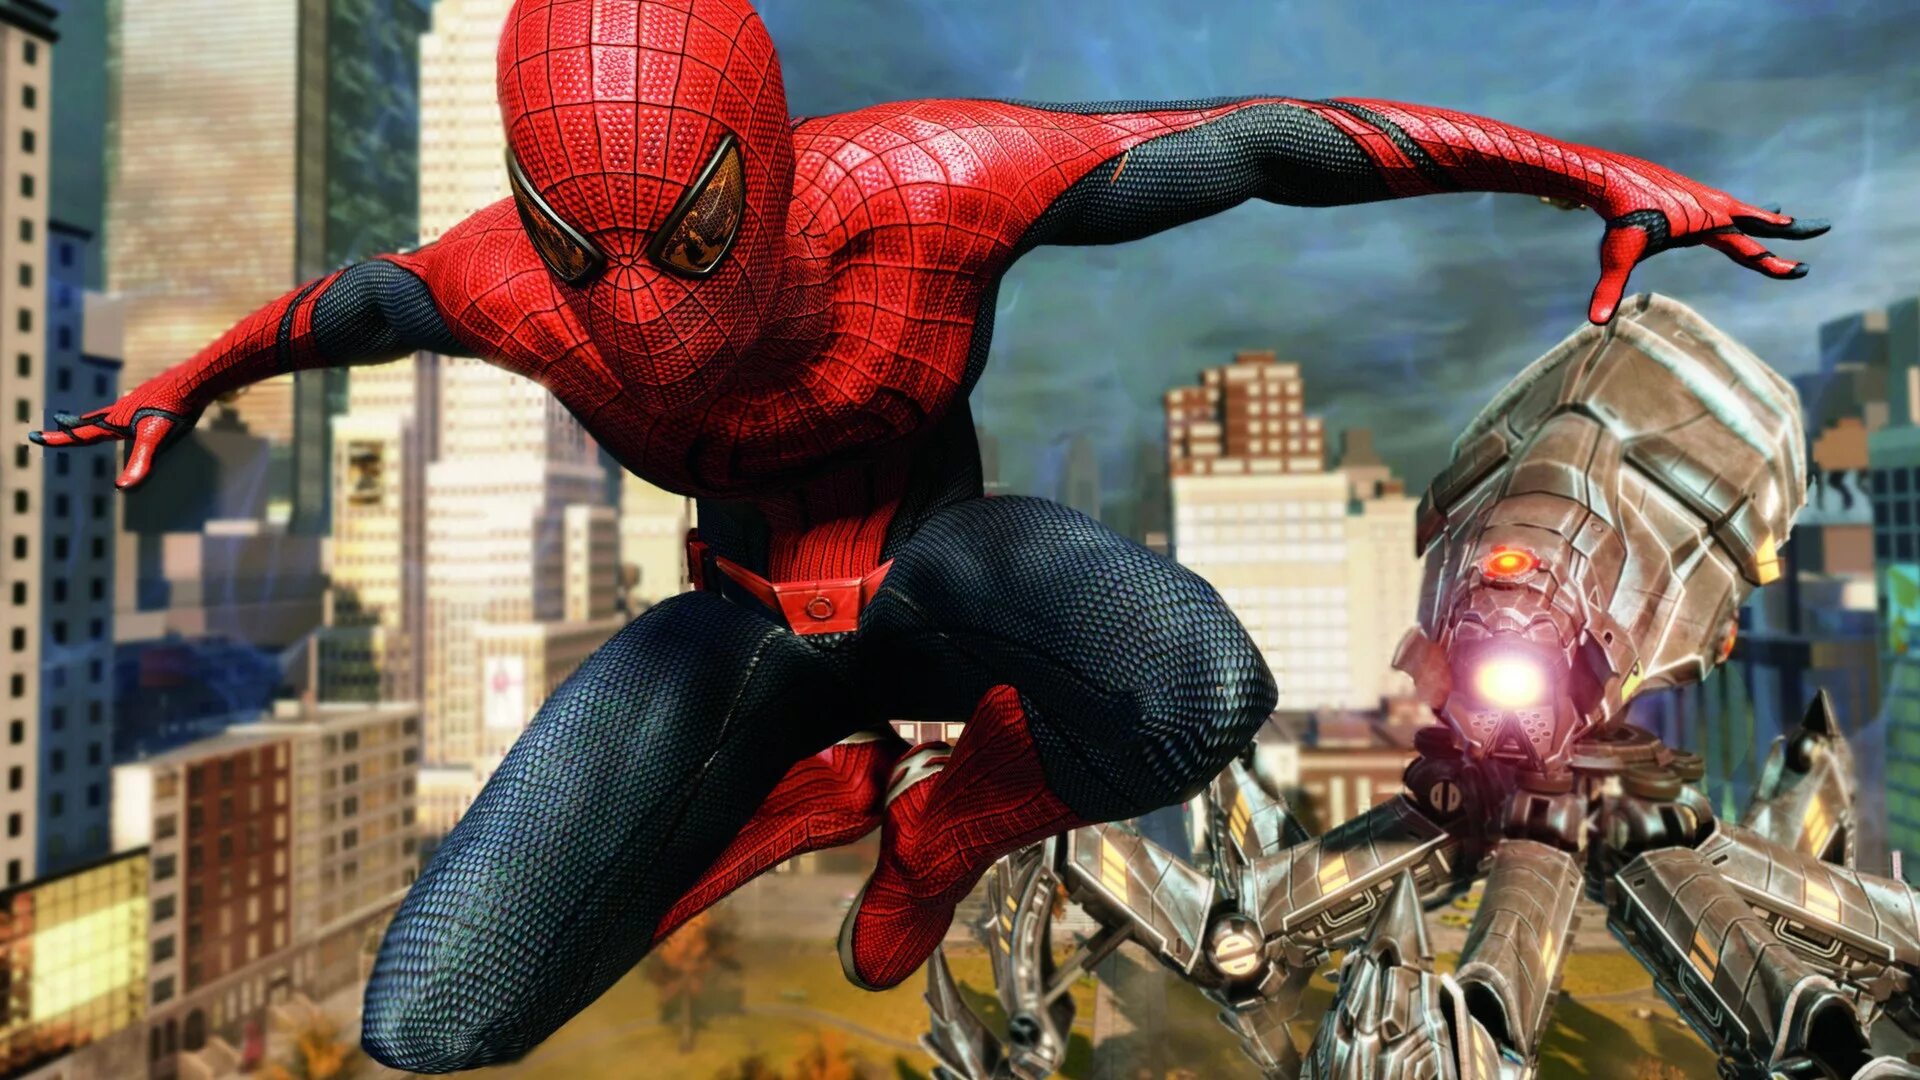 Включи игры spider man. The amazing Spider-man (игра, 2012). Эмейзинг человек паук 1. Человек паук амазинг игра. Spider man 2012 игра.